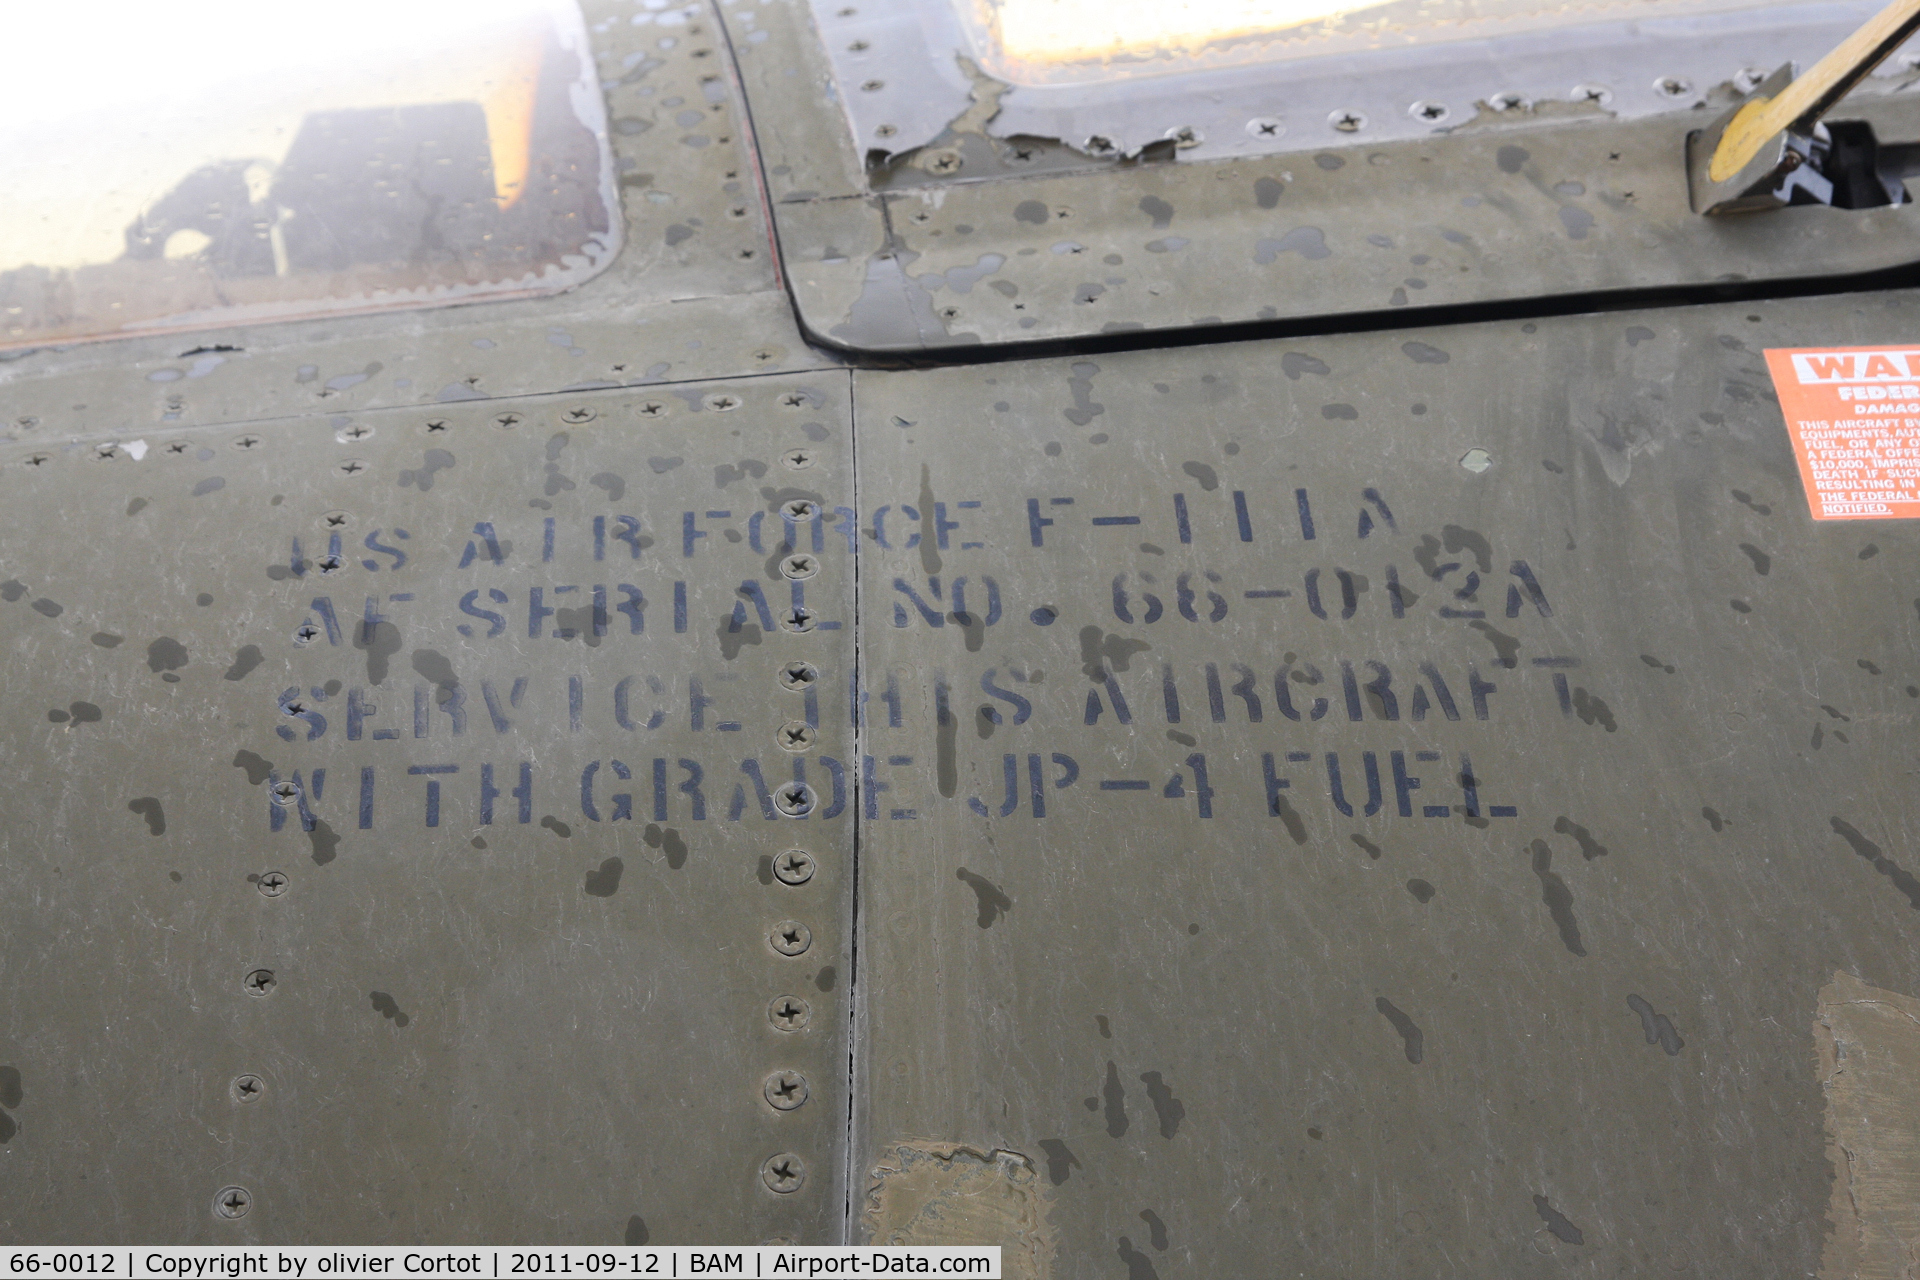 66-0012, 1967 General Dynamics F-111A C/N A1-30, data markings